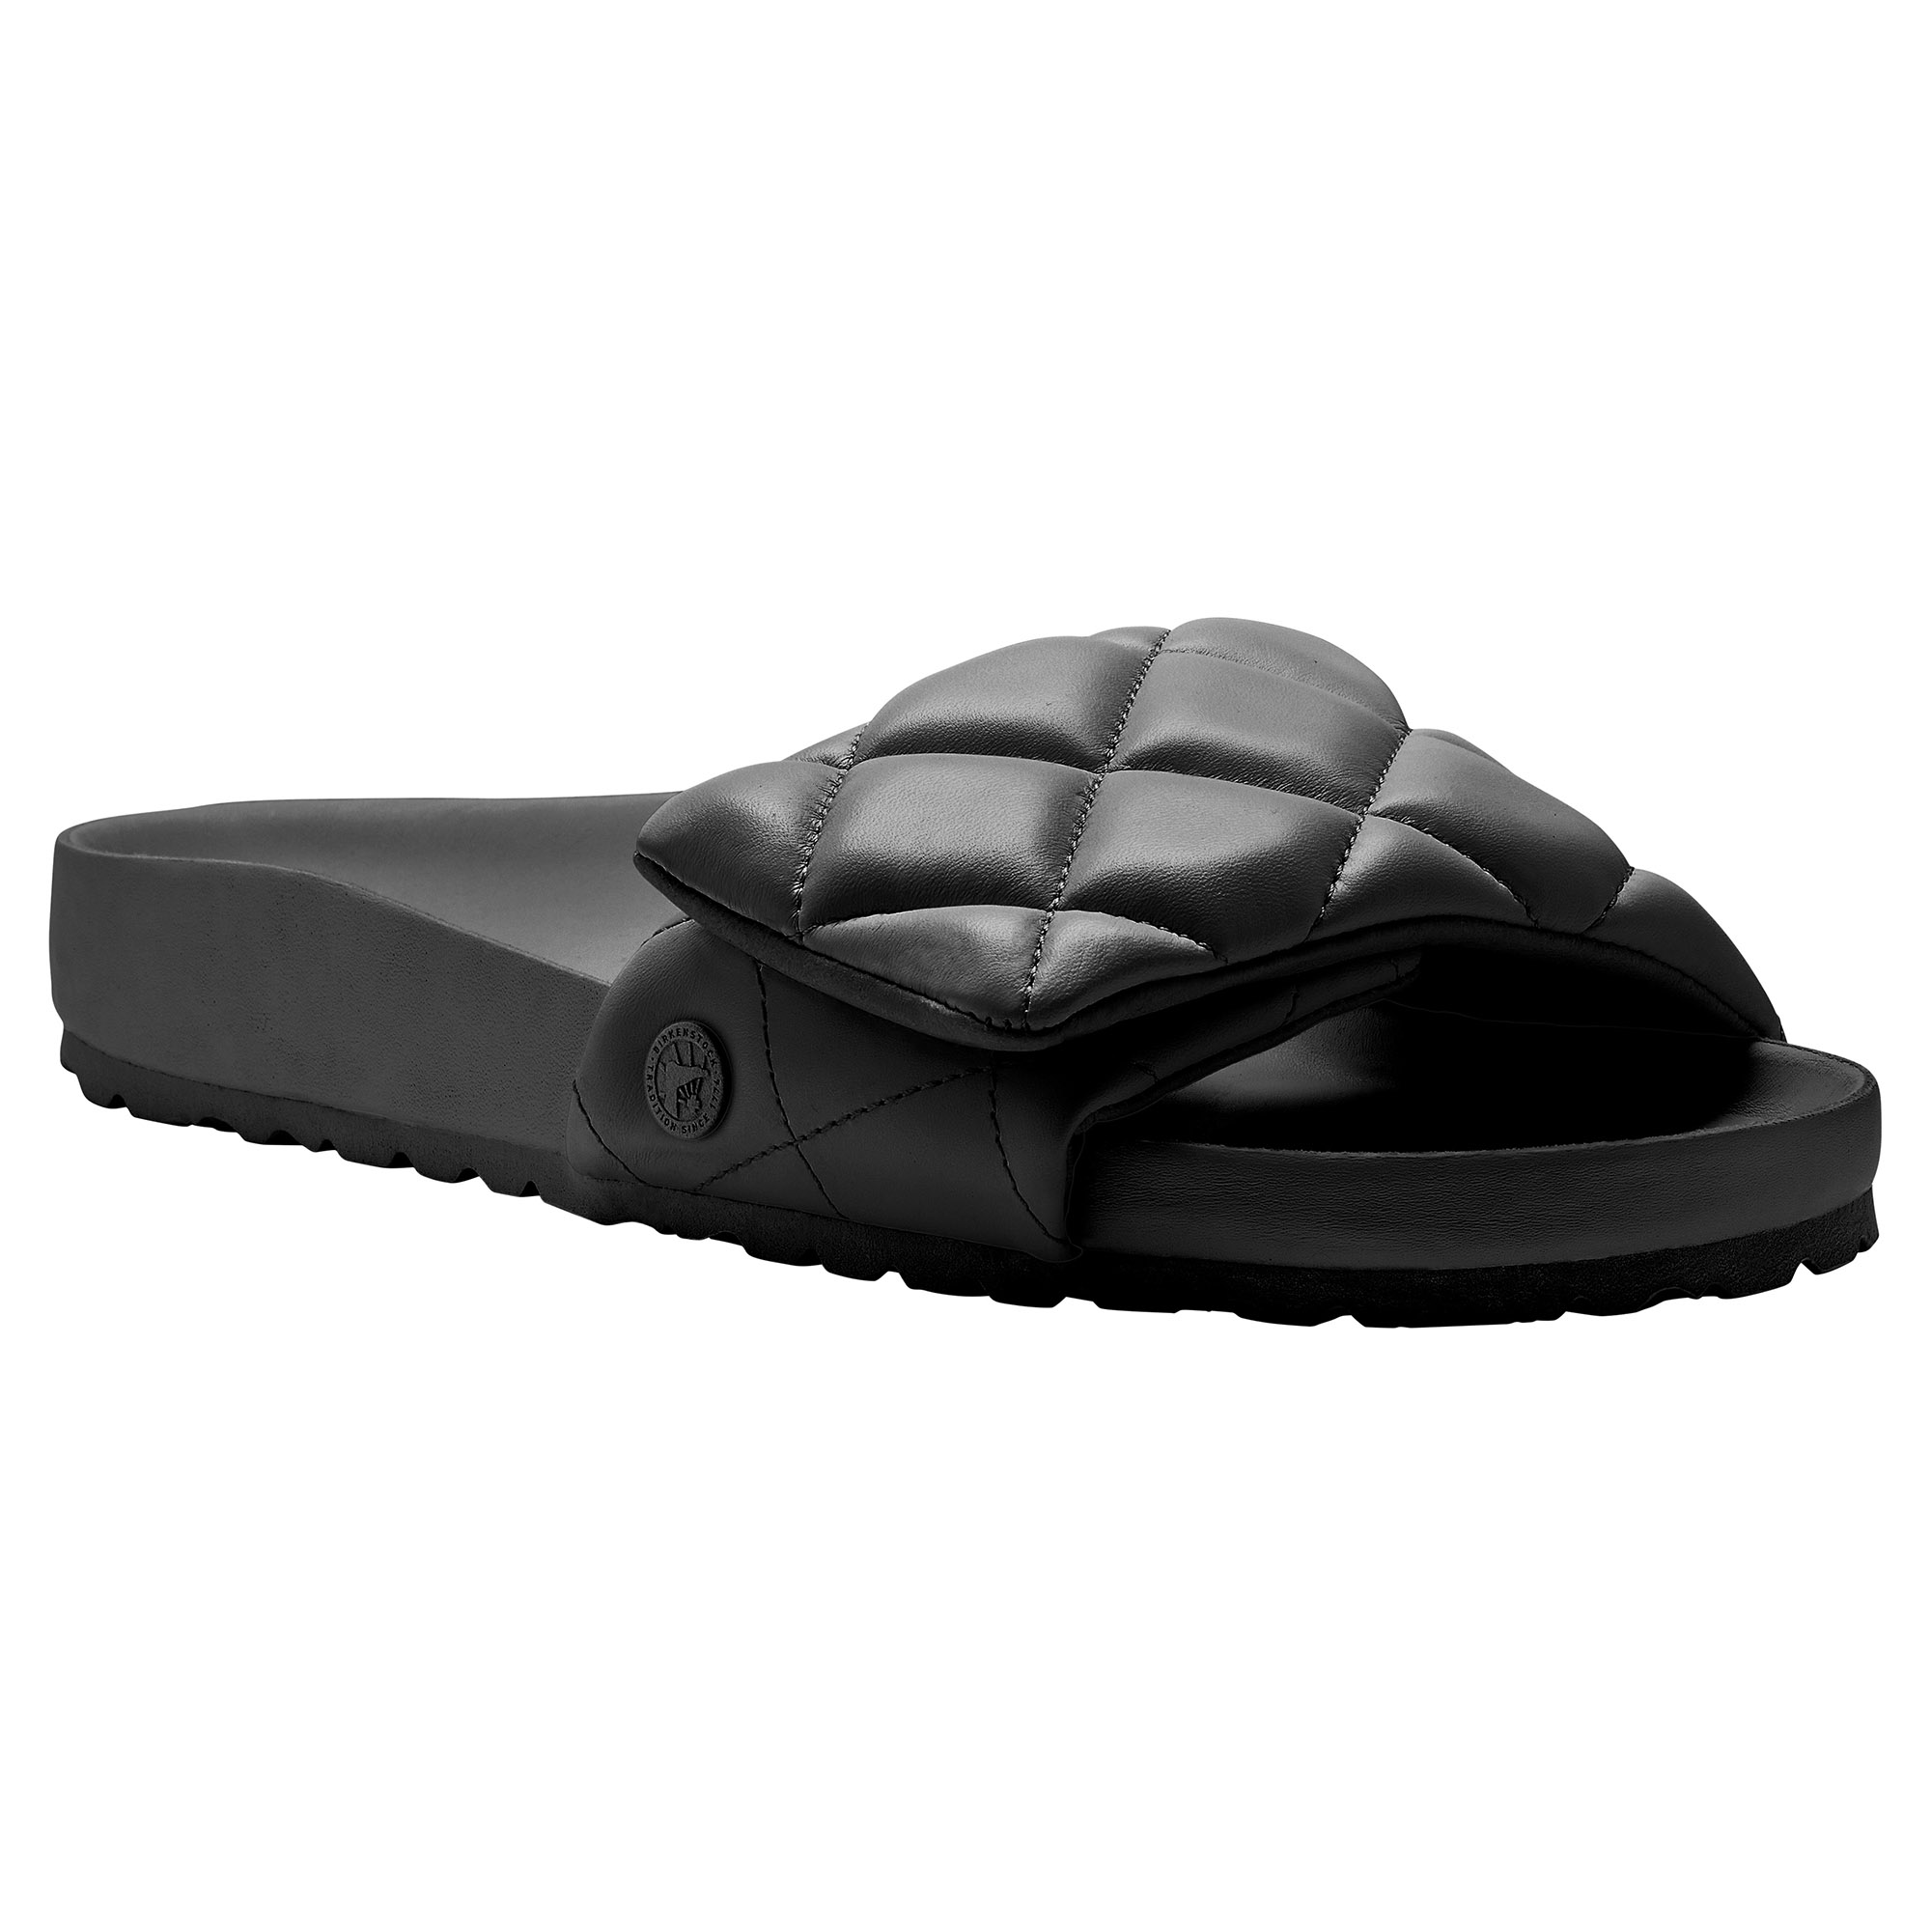 sylt padded leather sandal - black